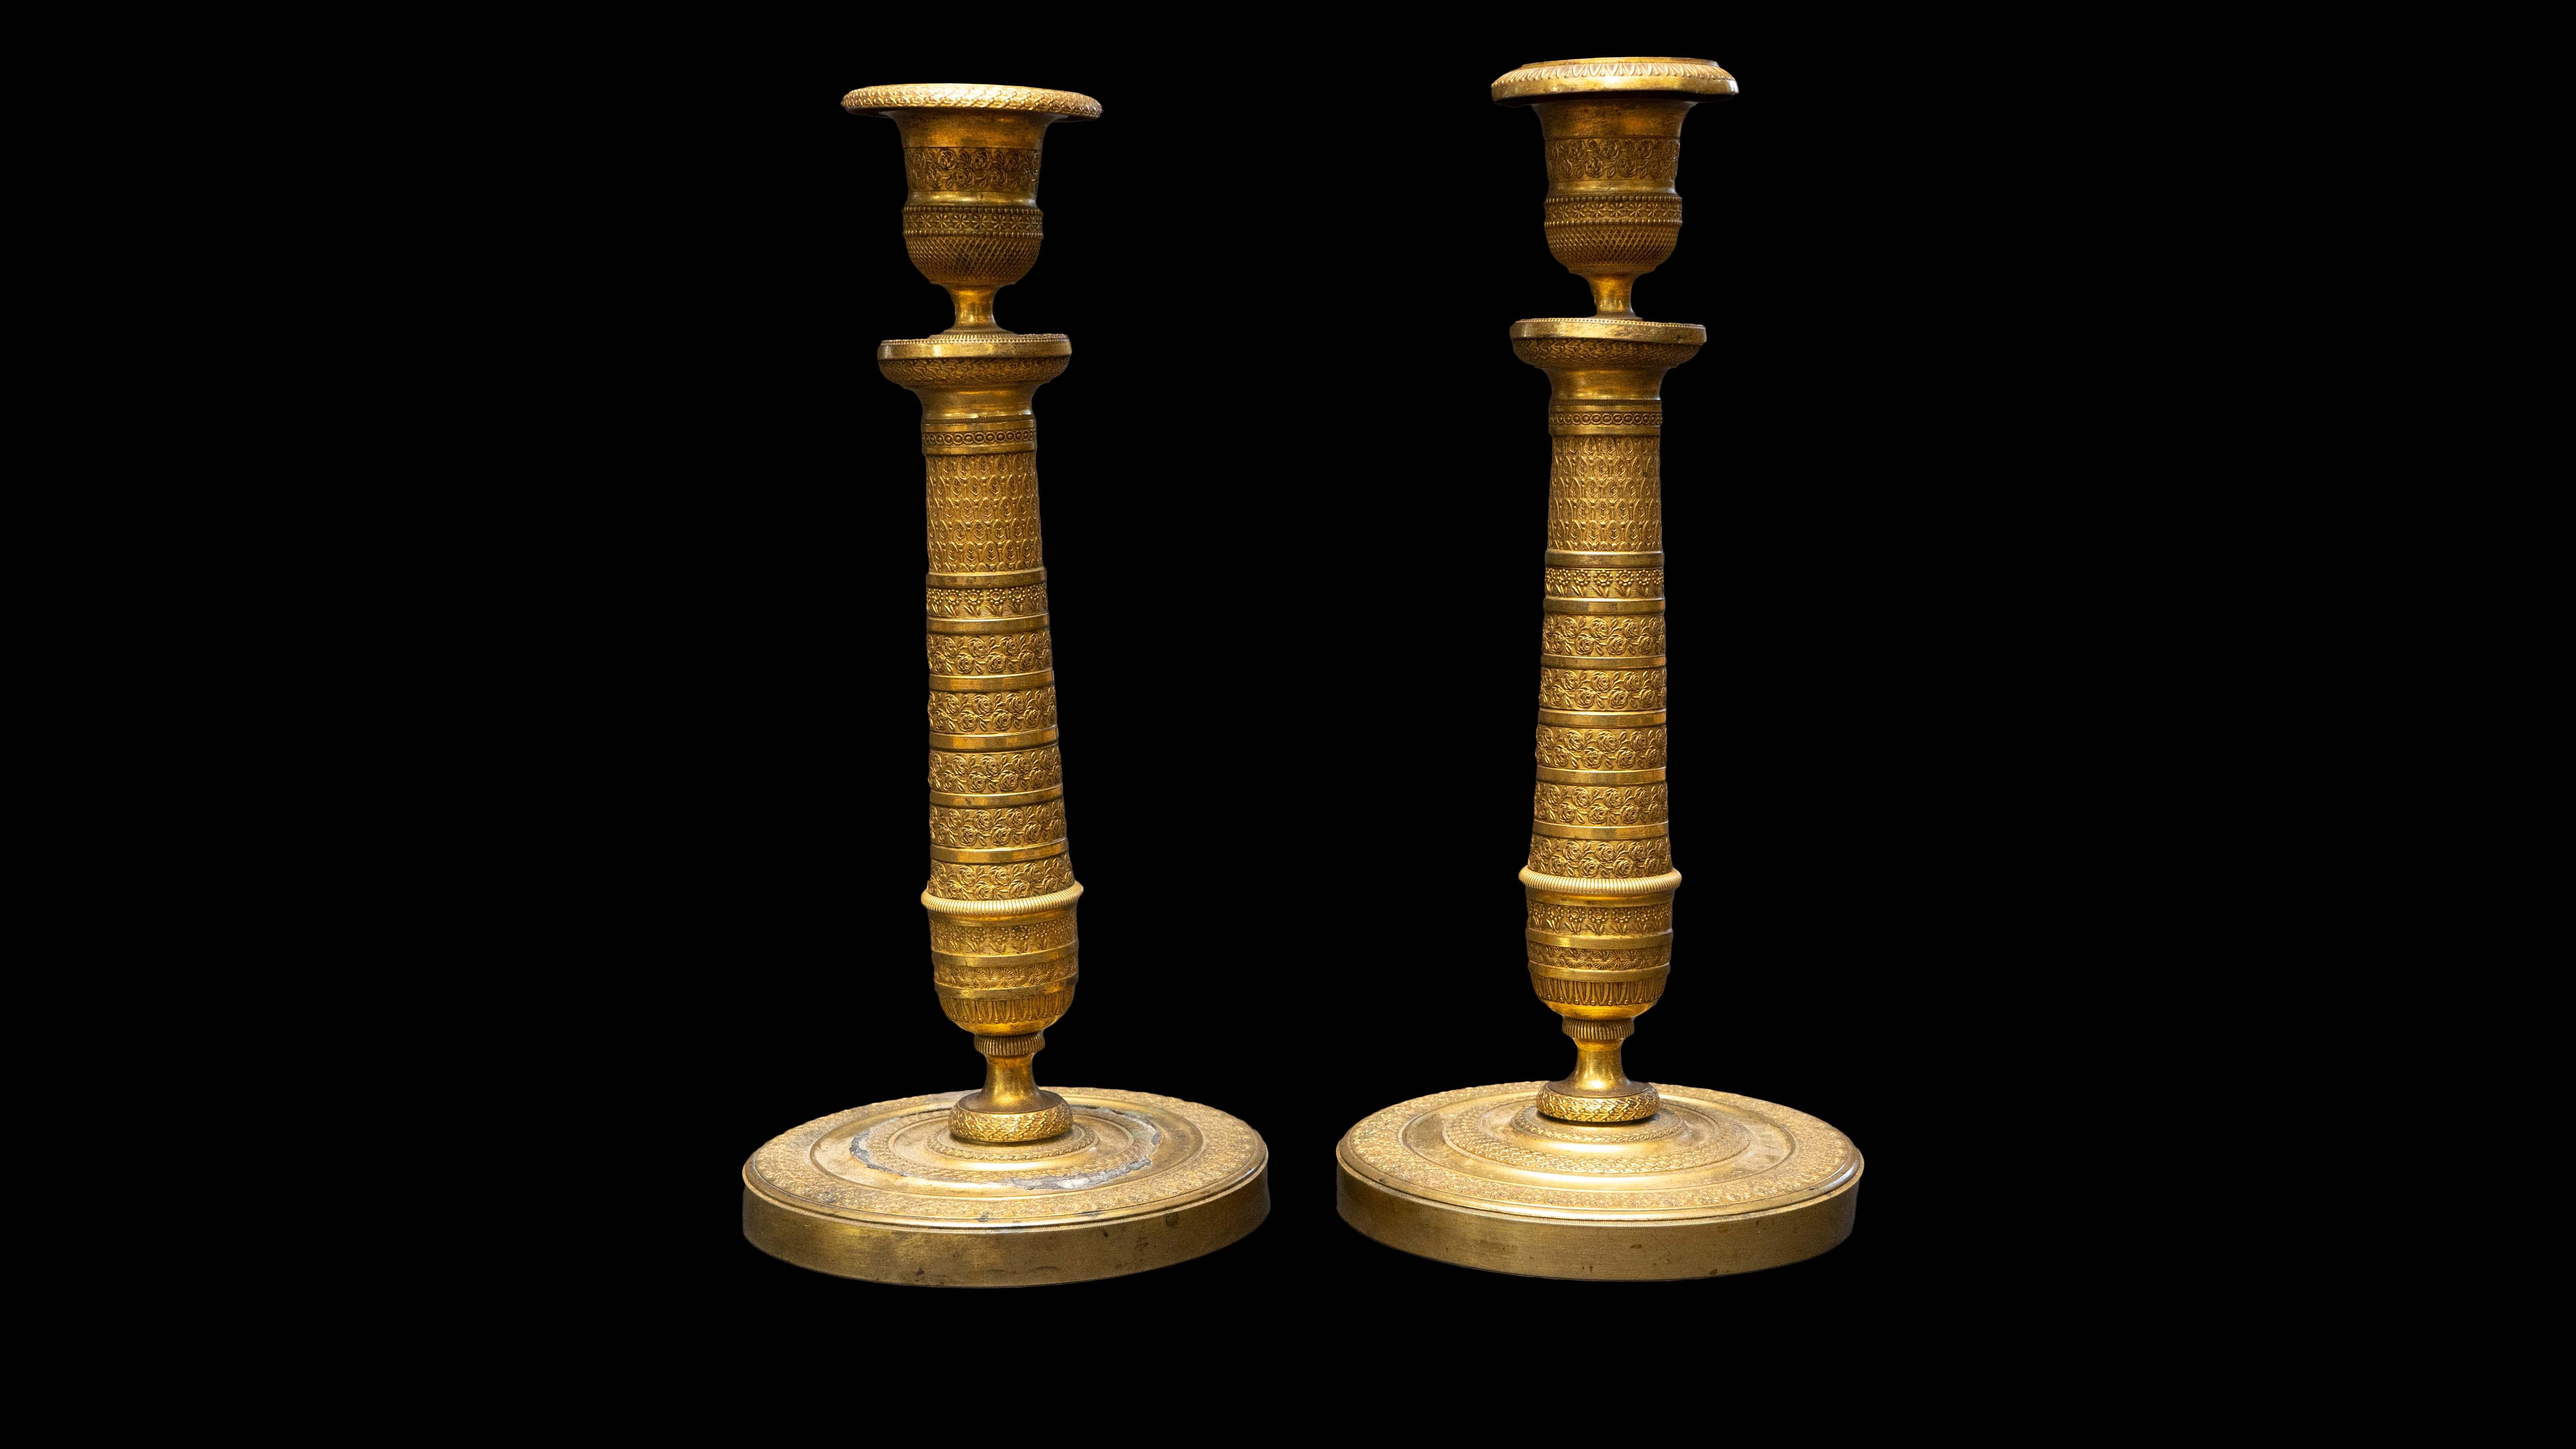 Pair of 19th century gilt candlesticks

Measures: 4.5